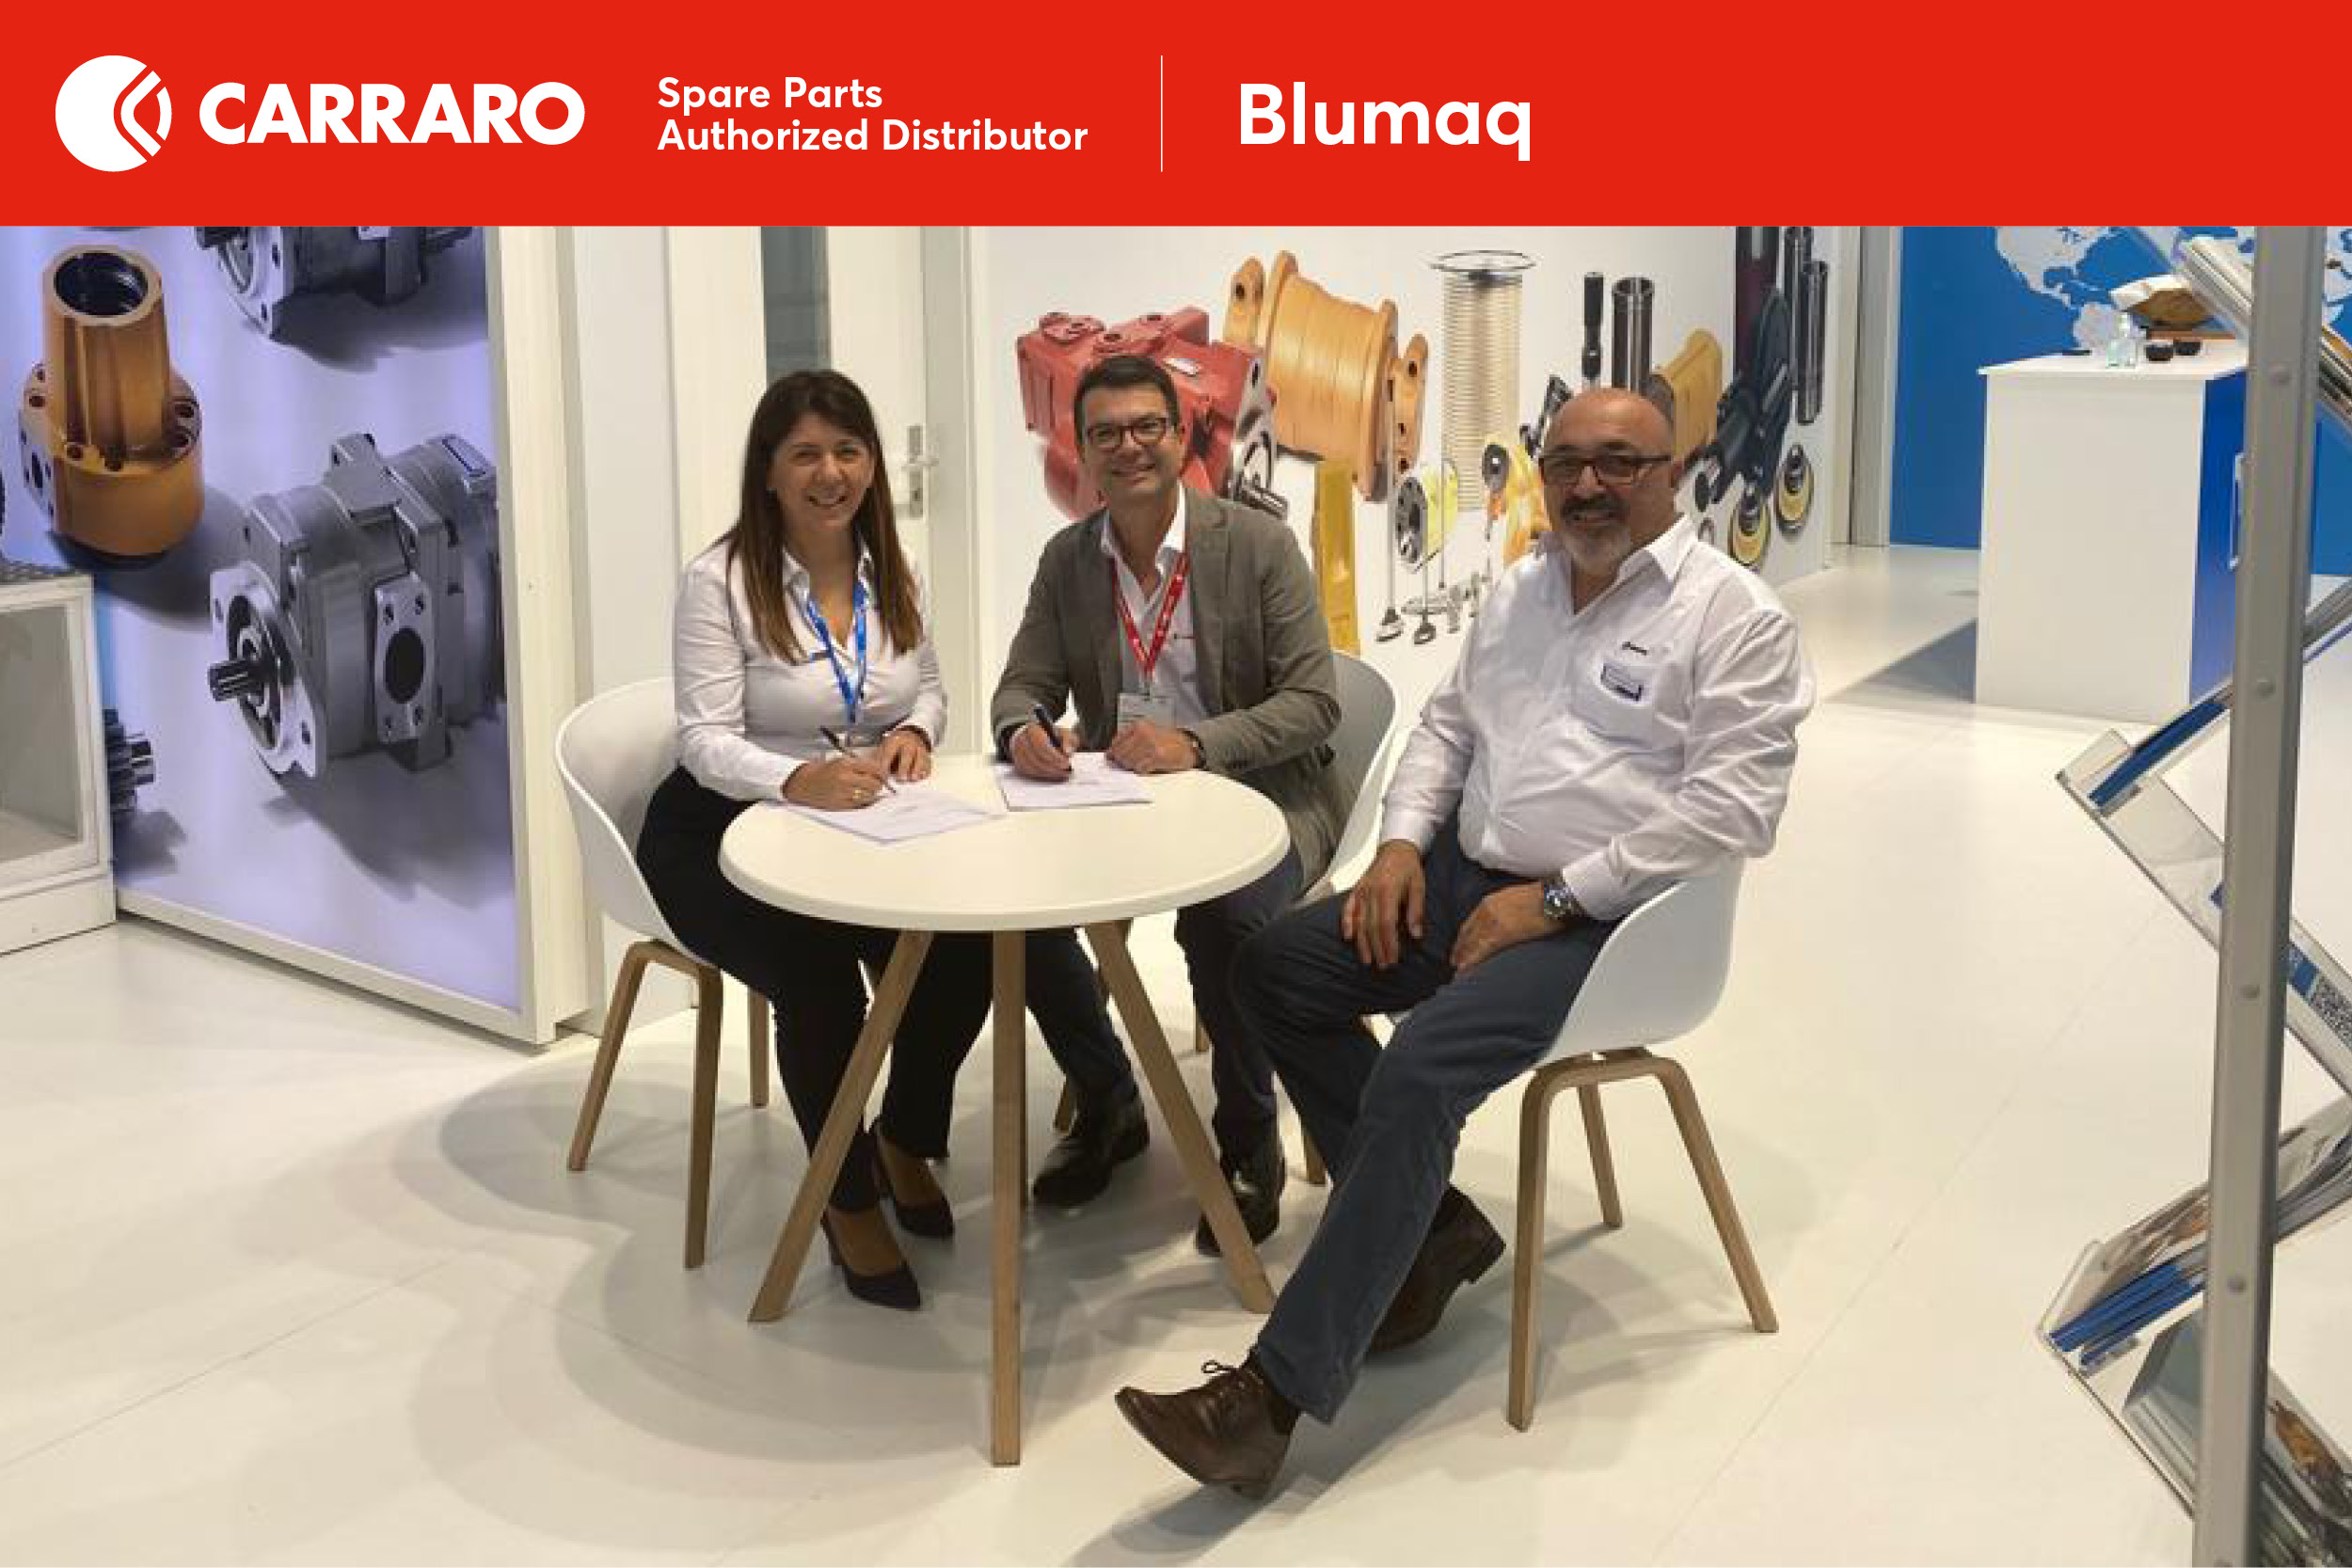 Blumaq Carraro new distributor in Spain